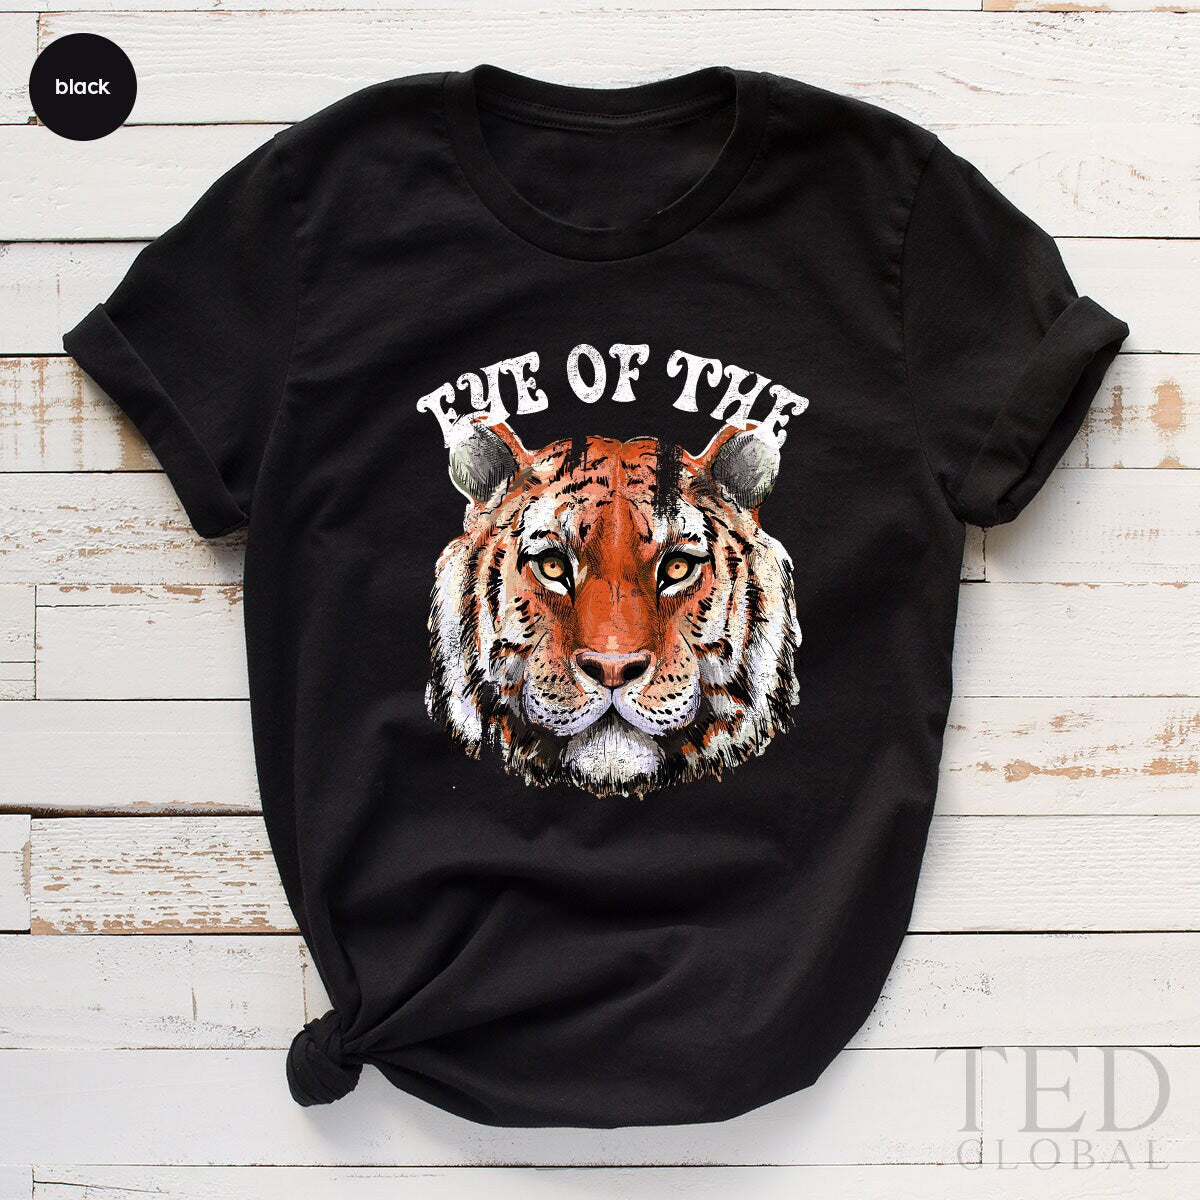 Cute Animal Shirt, Animal Lover T Shirt, Tiger T Shirt, Eye Of The Big Cat Shirts, Big Cat Lover Tee,  Tiger Owner T-Shirt, Gift For Tiger - Fastdeliverytees.com